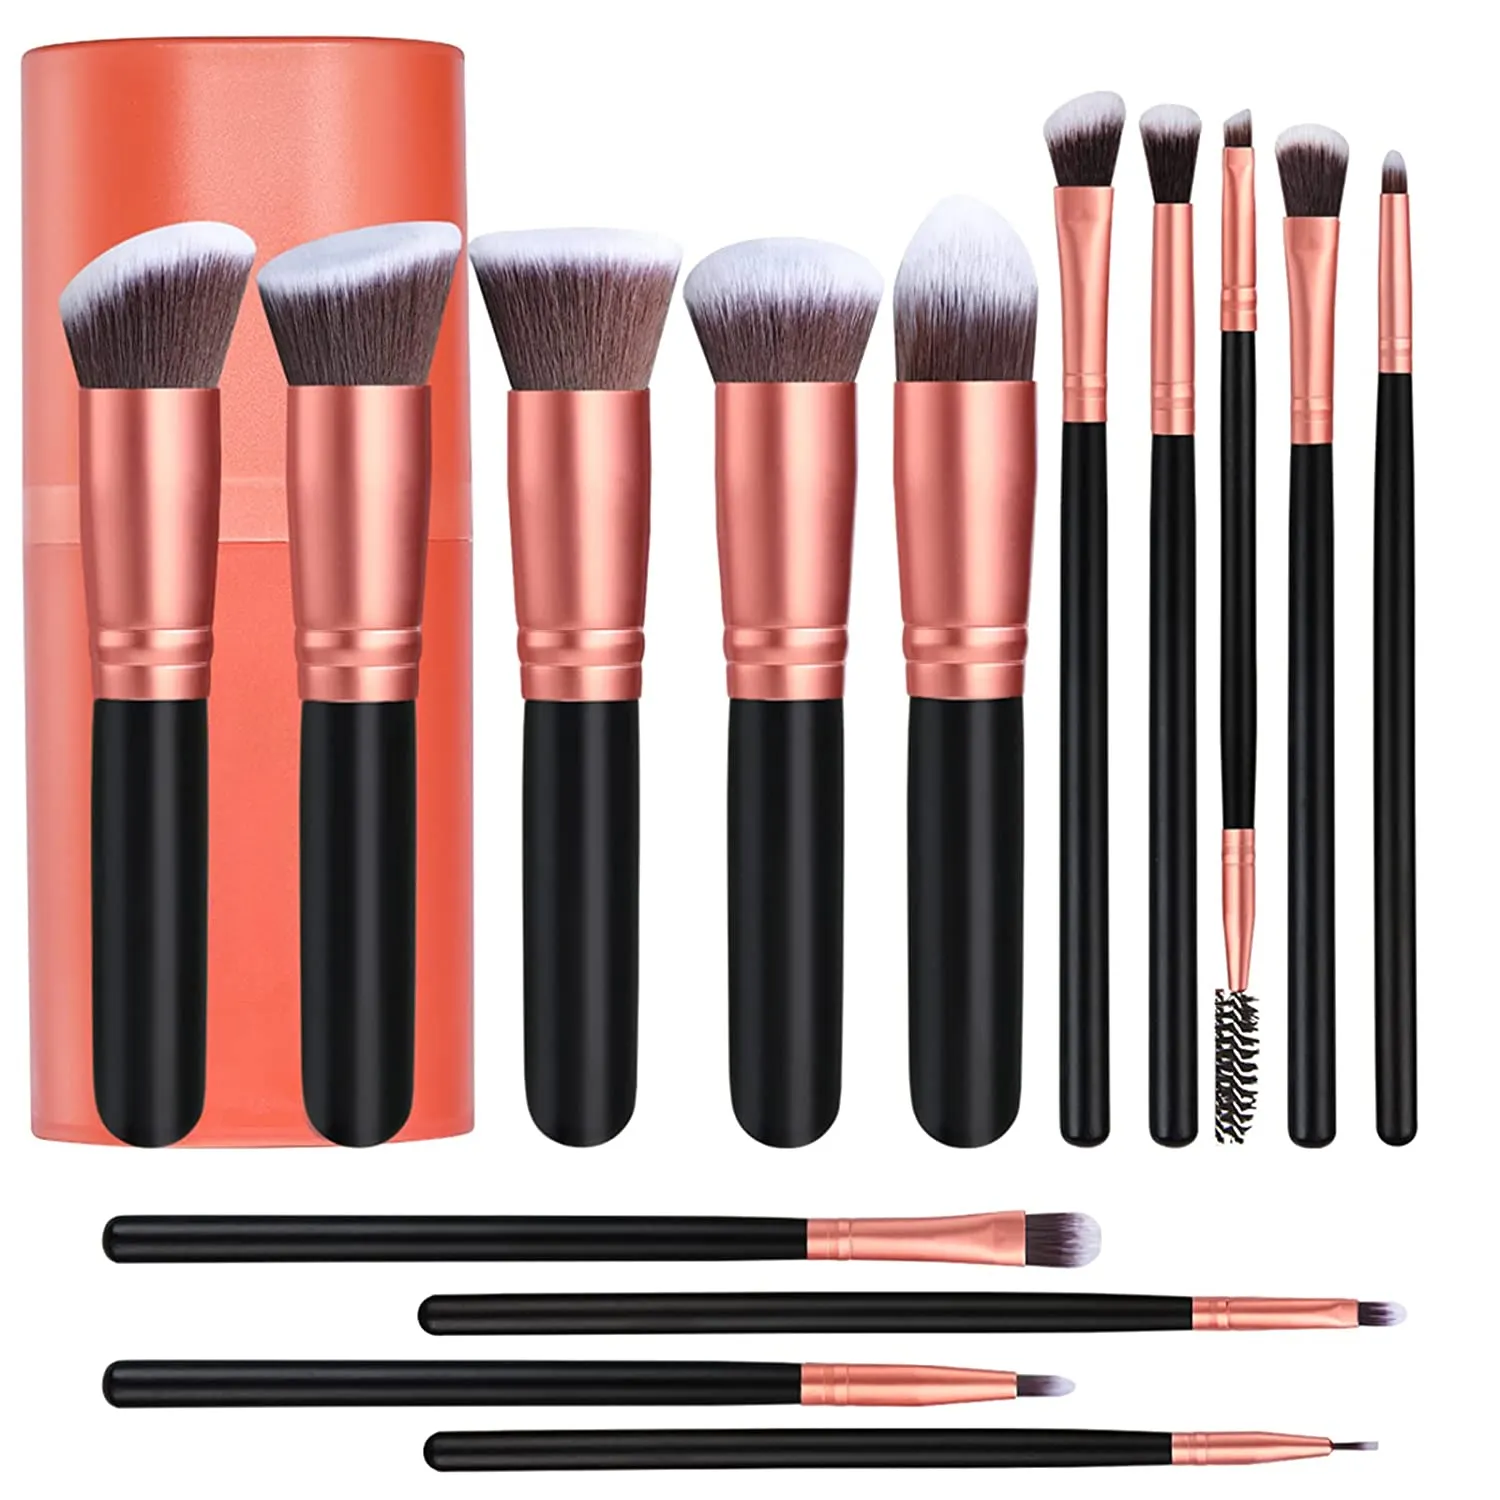 Hot Sale 14 pcs Rose Gold Cosméticos Sintéticos Make Up Brush OEM disponível Wooden Handle Makeup Brushes Set brocha de maquillaje